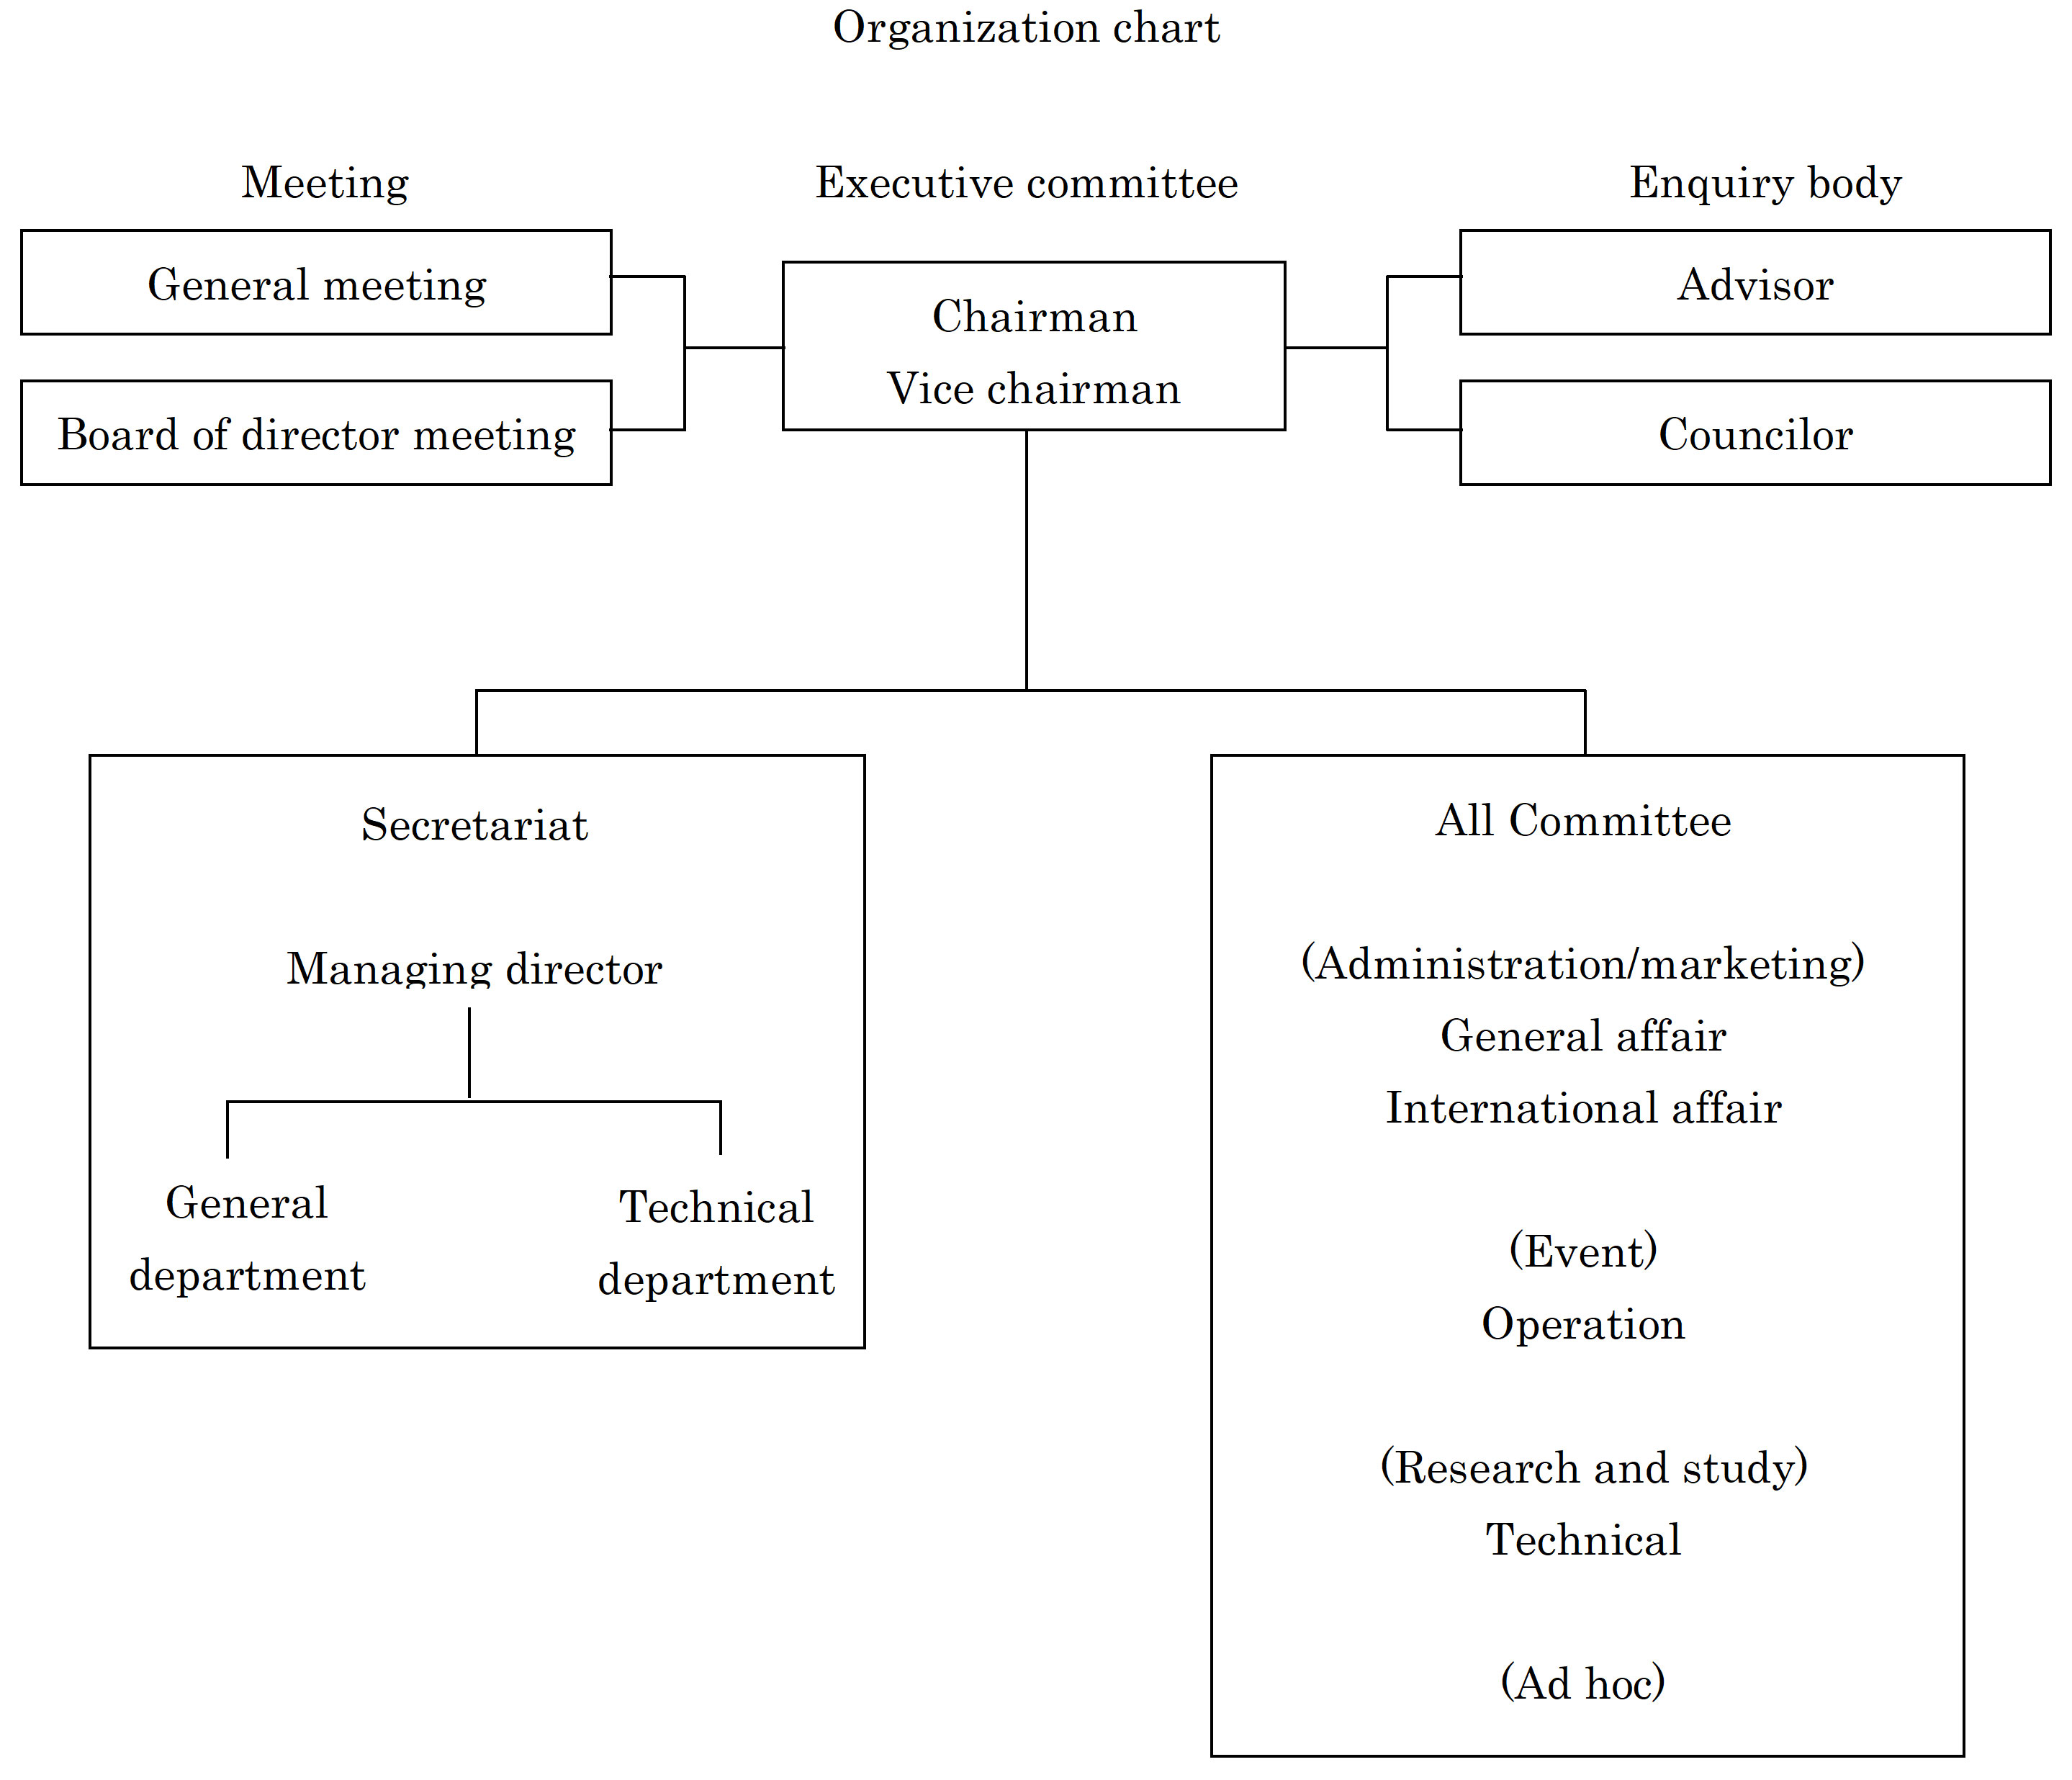 Organization_chart.jpg